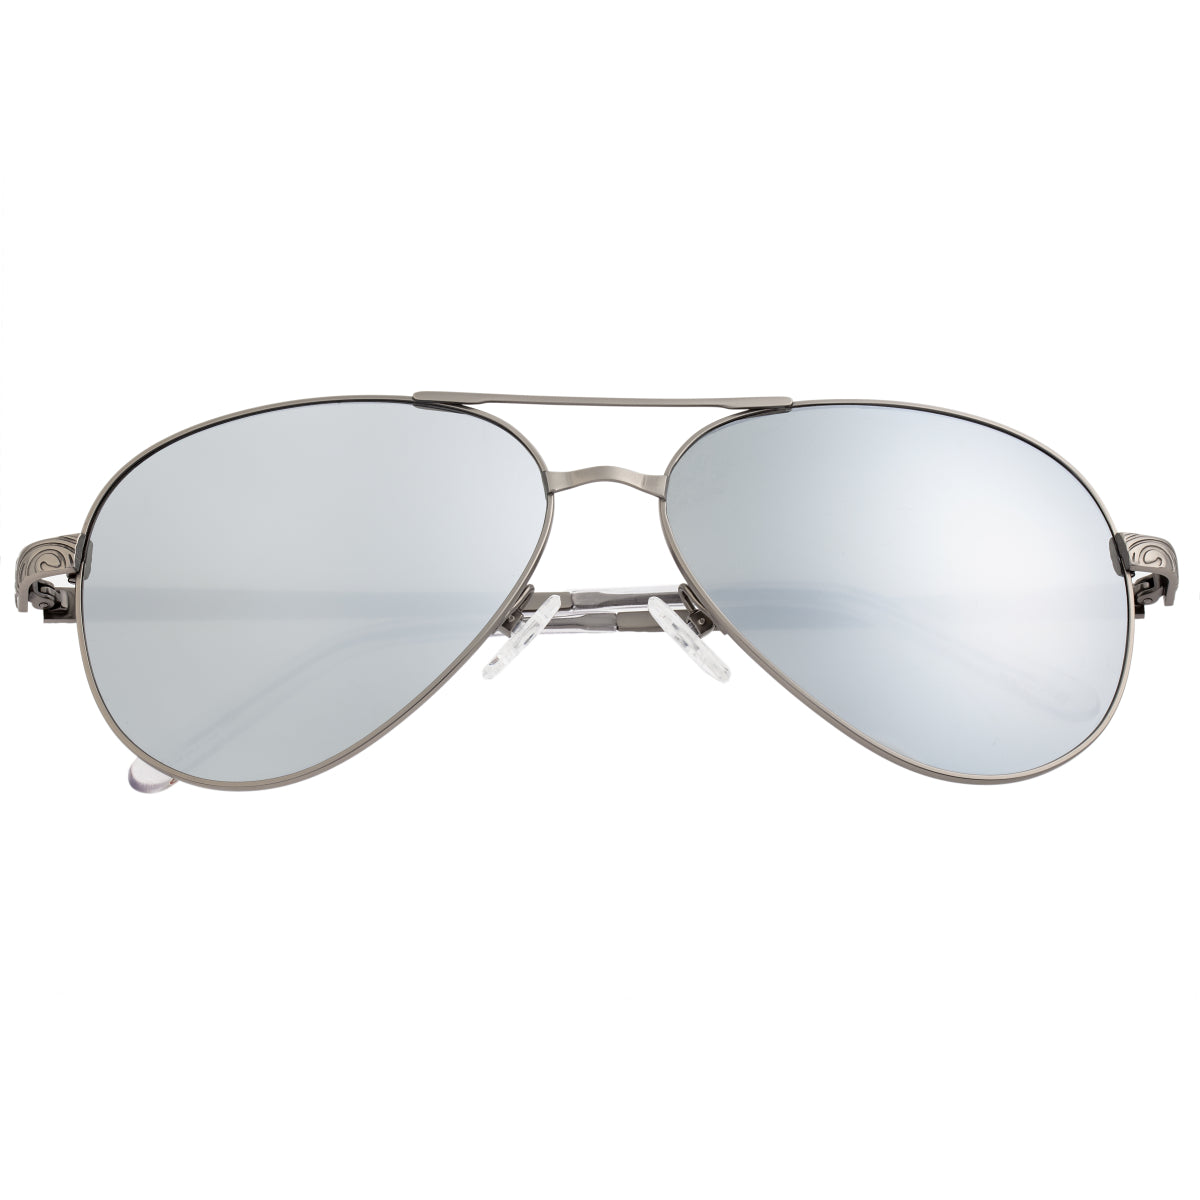 Breed Void Titanium Polarized Sunglasses - Gunmetal/Silver - BSG059GM